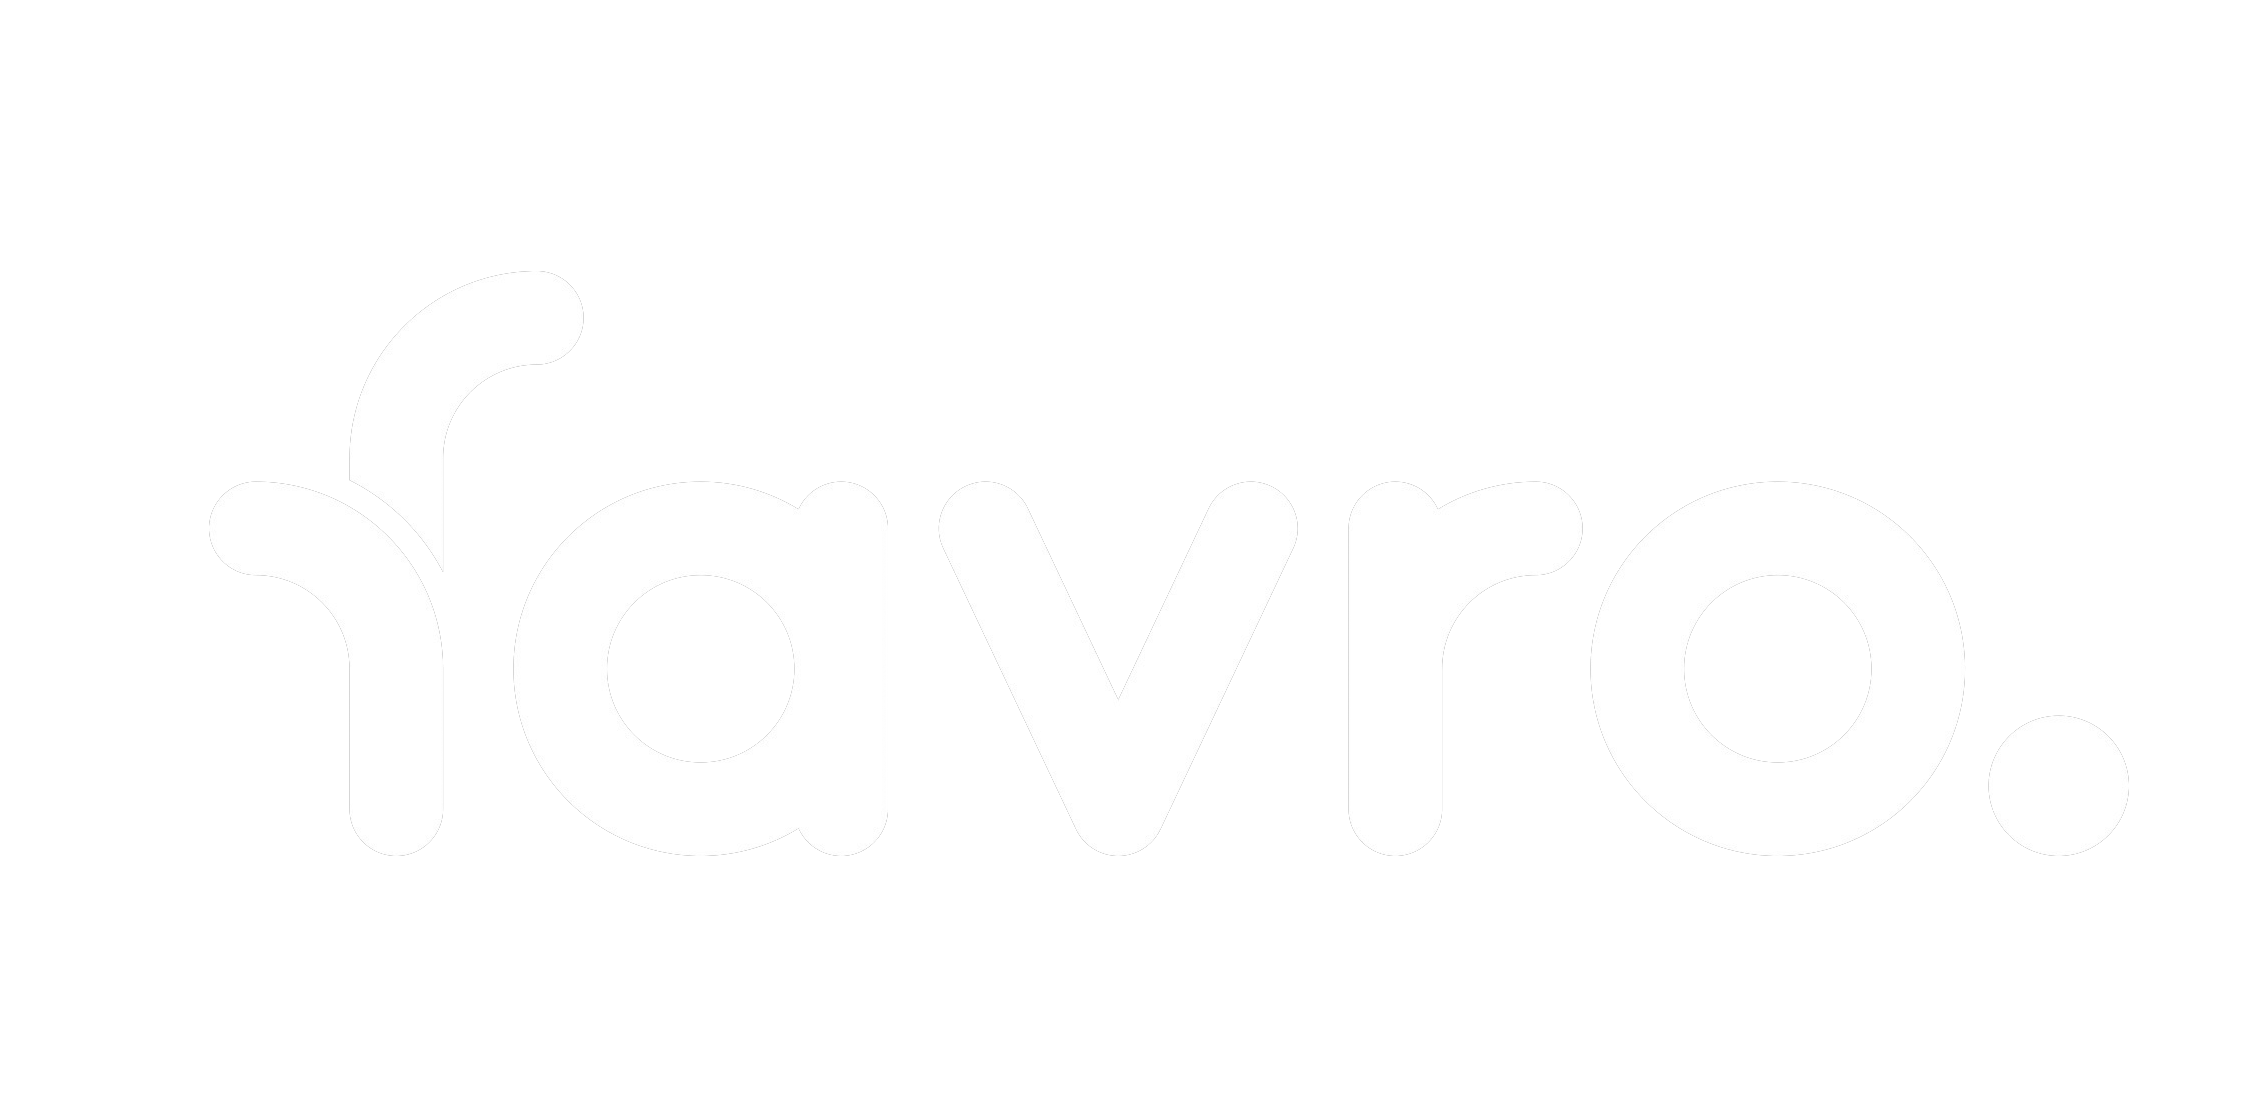 The Favro logo